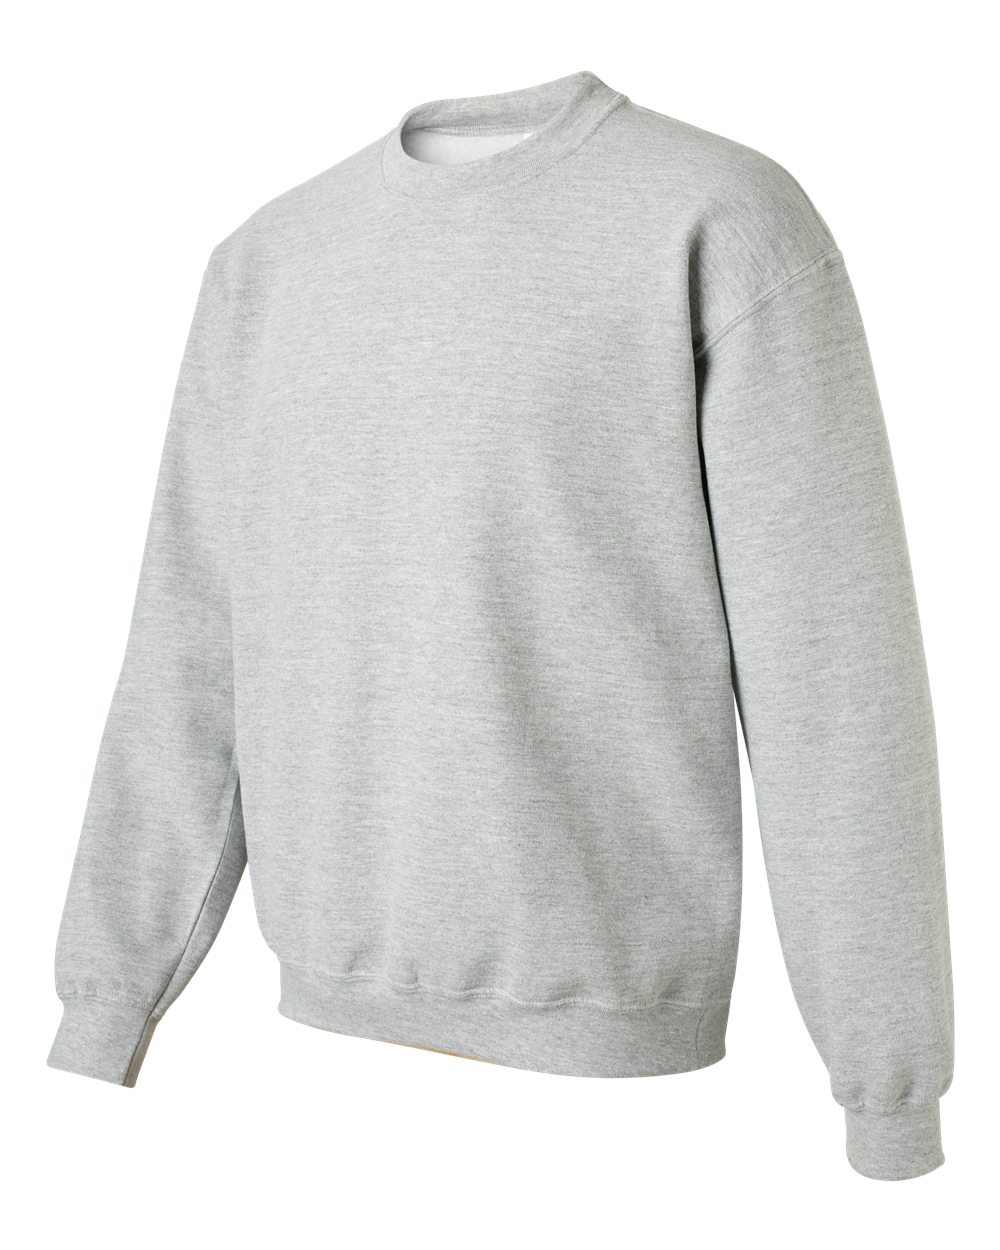 Gildan Heavy Blend Crew Neck sweater GI18000 Sports Grey